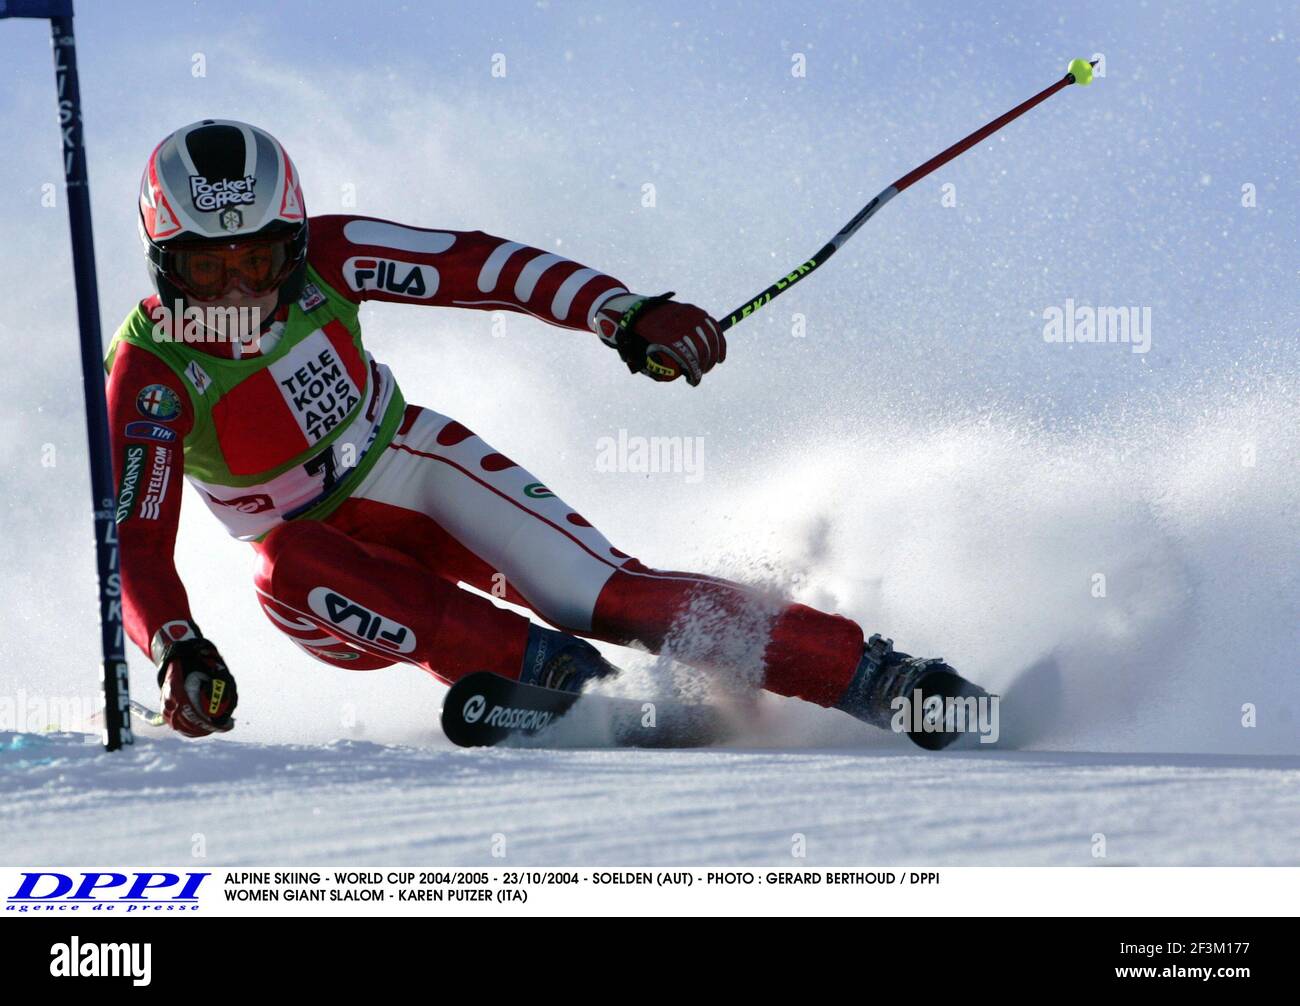 ALPINE SKIING - WORLD CUP 2004/2005 - 23/10/2004 - SOELDEN (AUT) - PHOTO : GERARD BERTHOUD / DPPI WOMEN GIANT SLALOM - KAREN PUTZER (ITA) Stock Photo